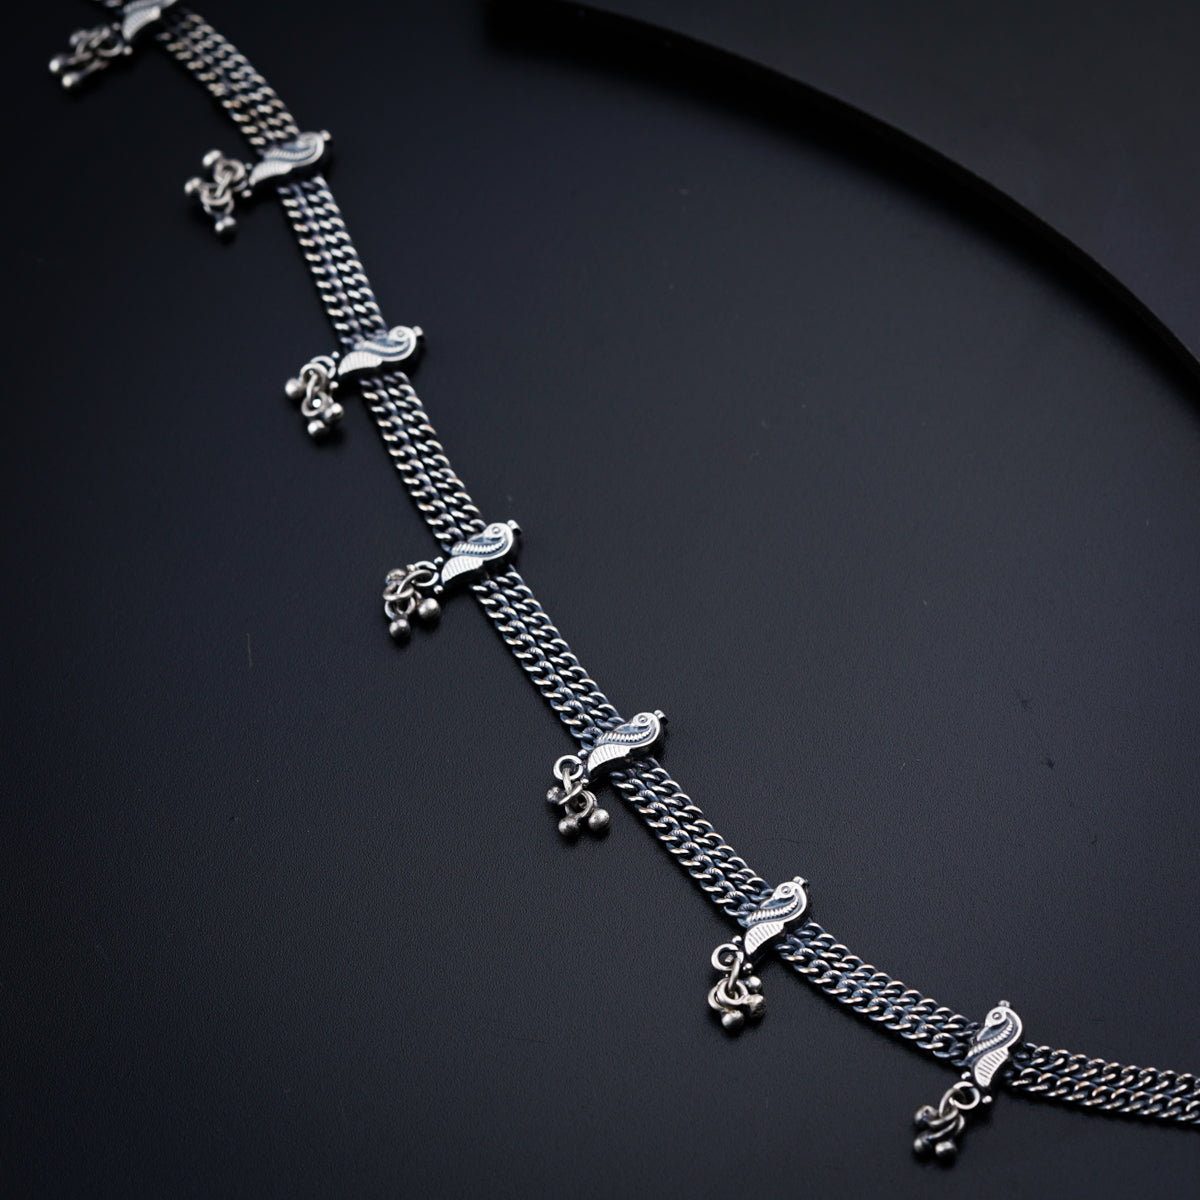 a silver chain bracelet on a black surface